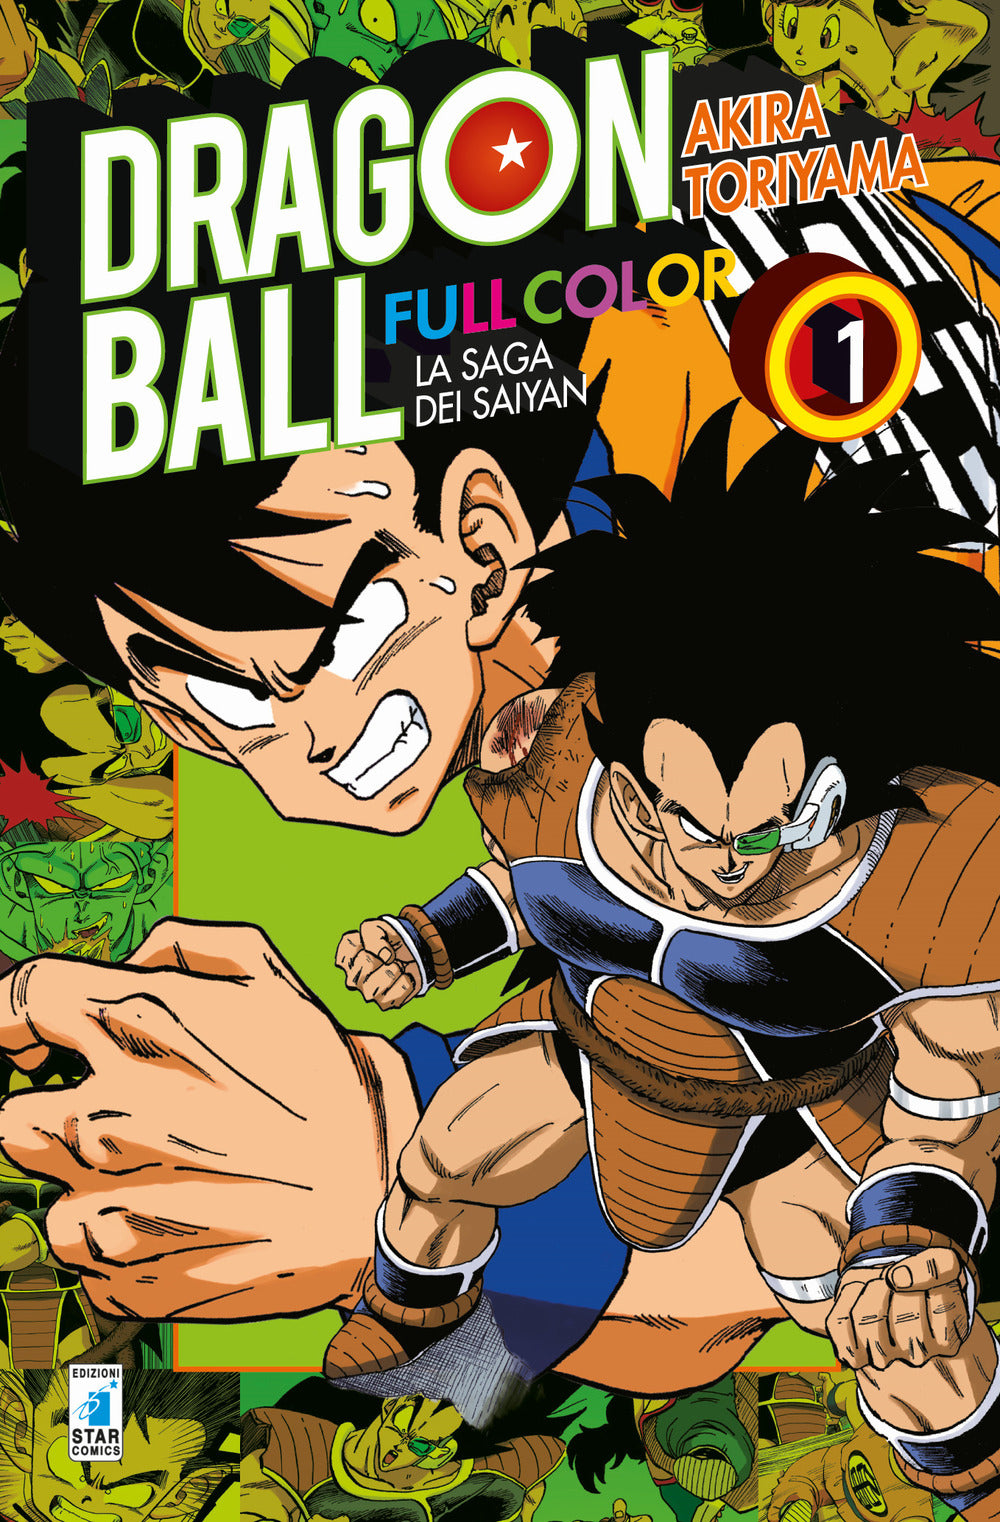 La saga dei Saiyan. Dragon Ball full color. Vol. 1